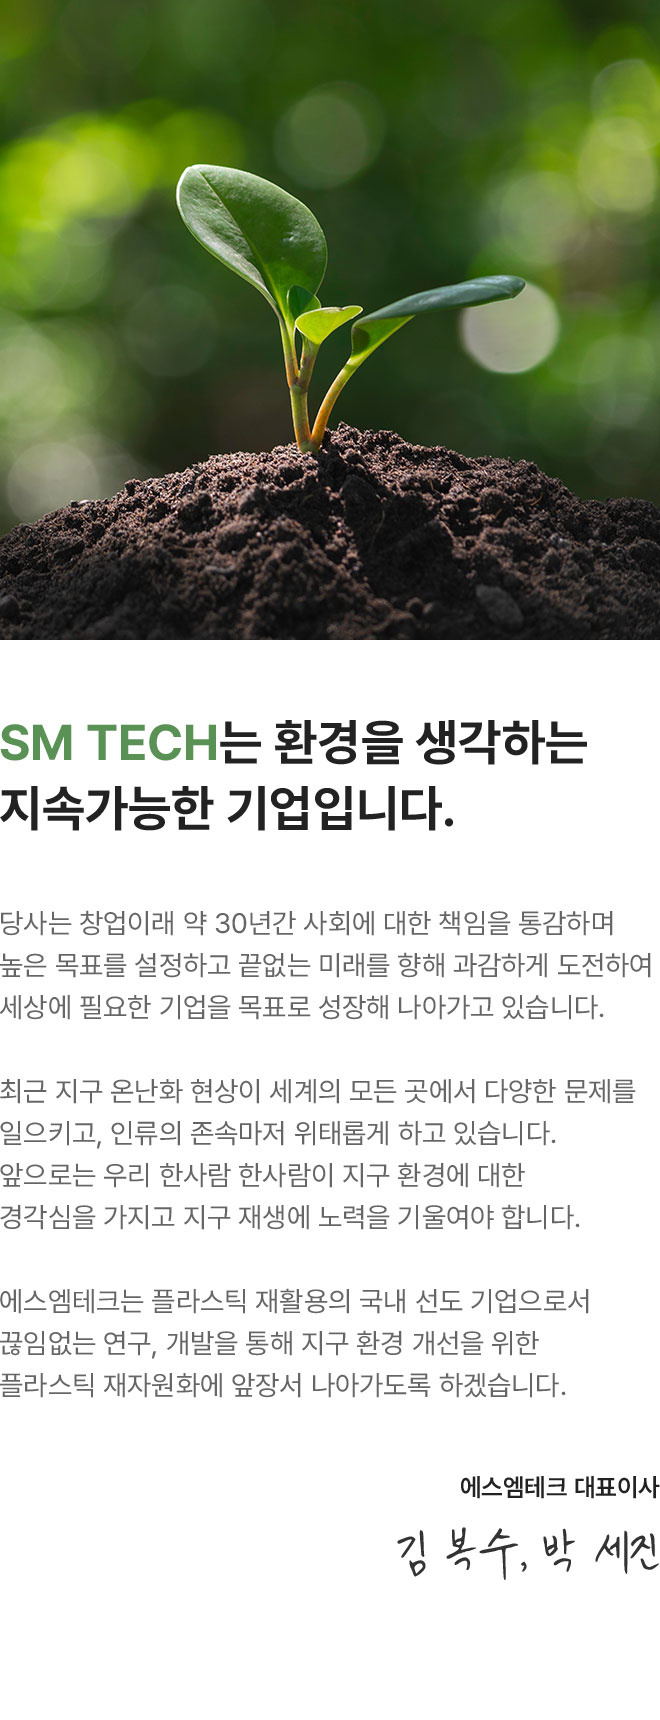 SM TECH는 환경을 생각하는 지속가능한 기업입니다.